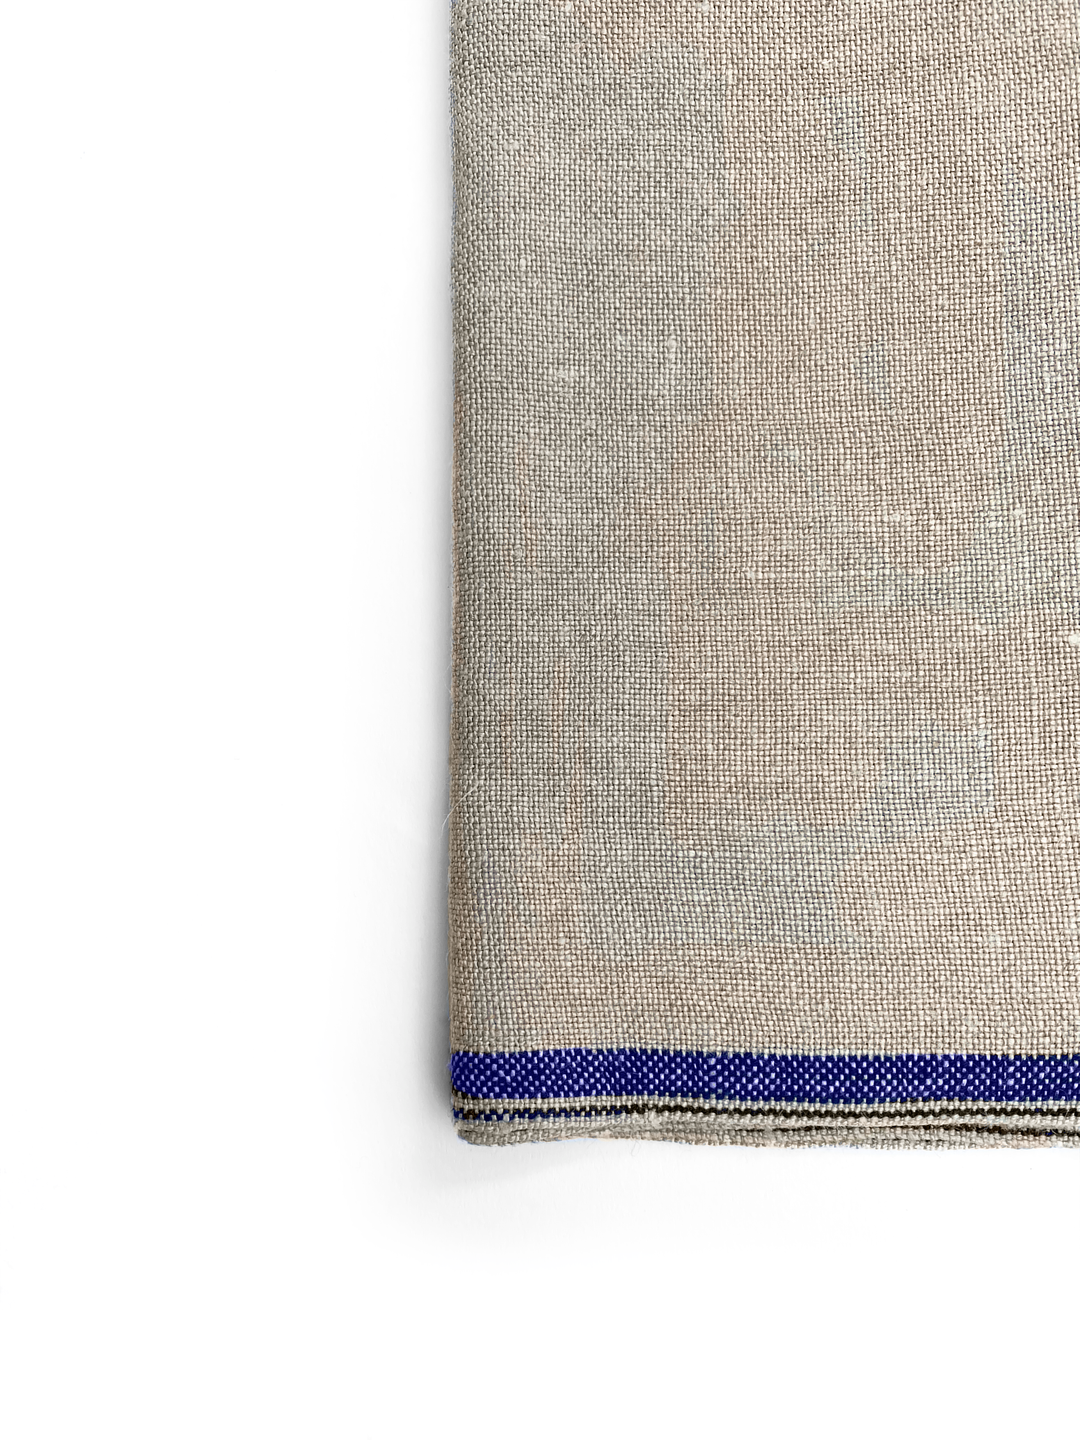 Mungo - Linen Selvedge Serviette Napkin with Colored Edge | Cobalt